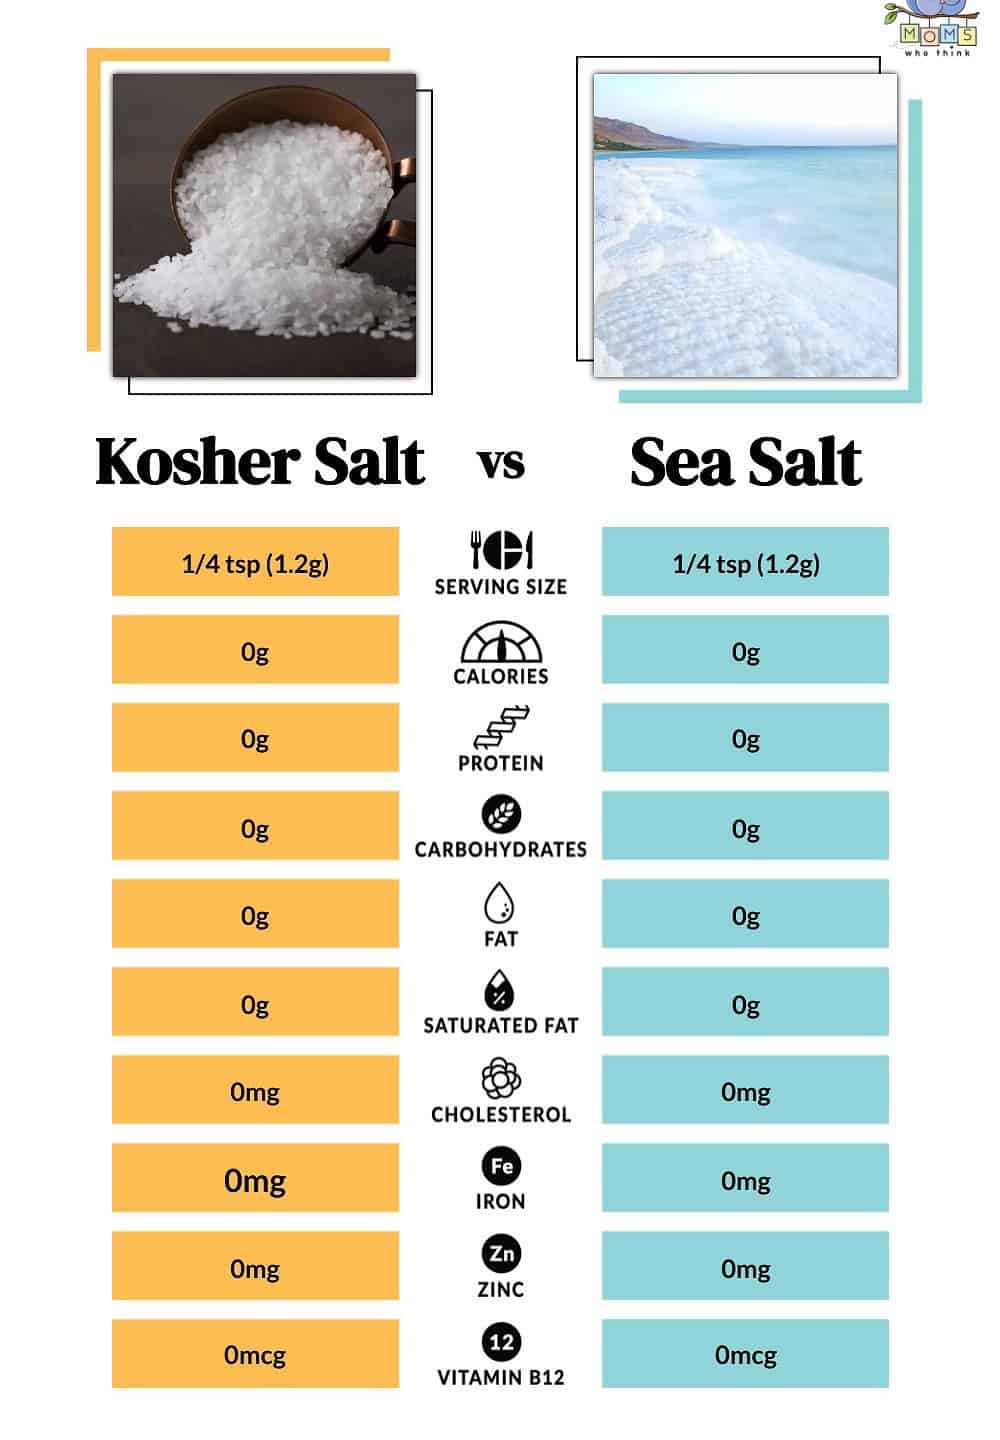 Kosher Salt vs Sea Salt Nutritional Facts